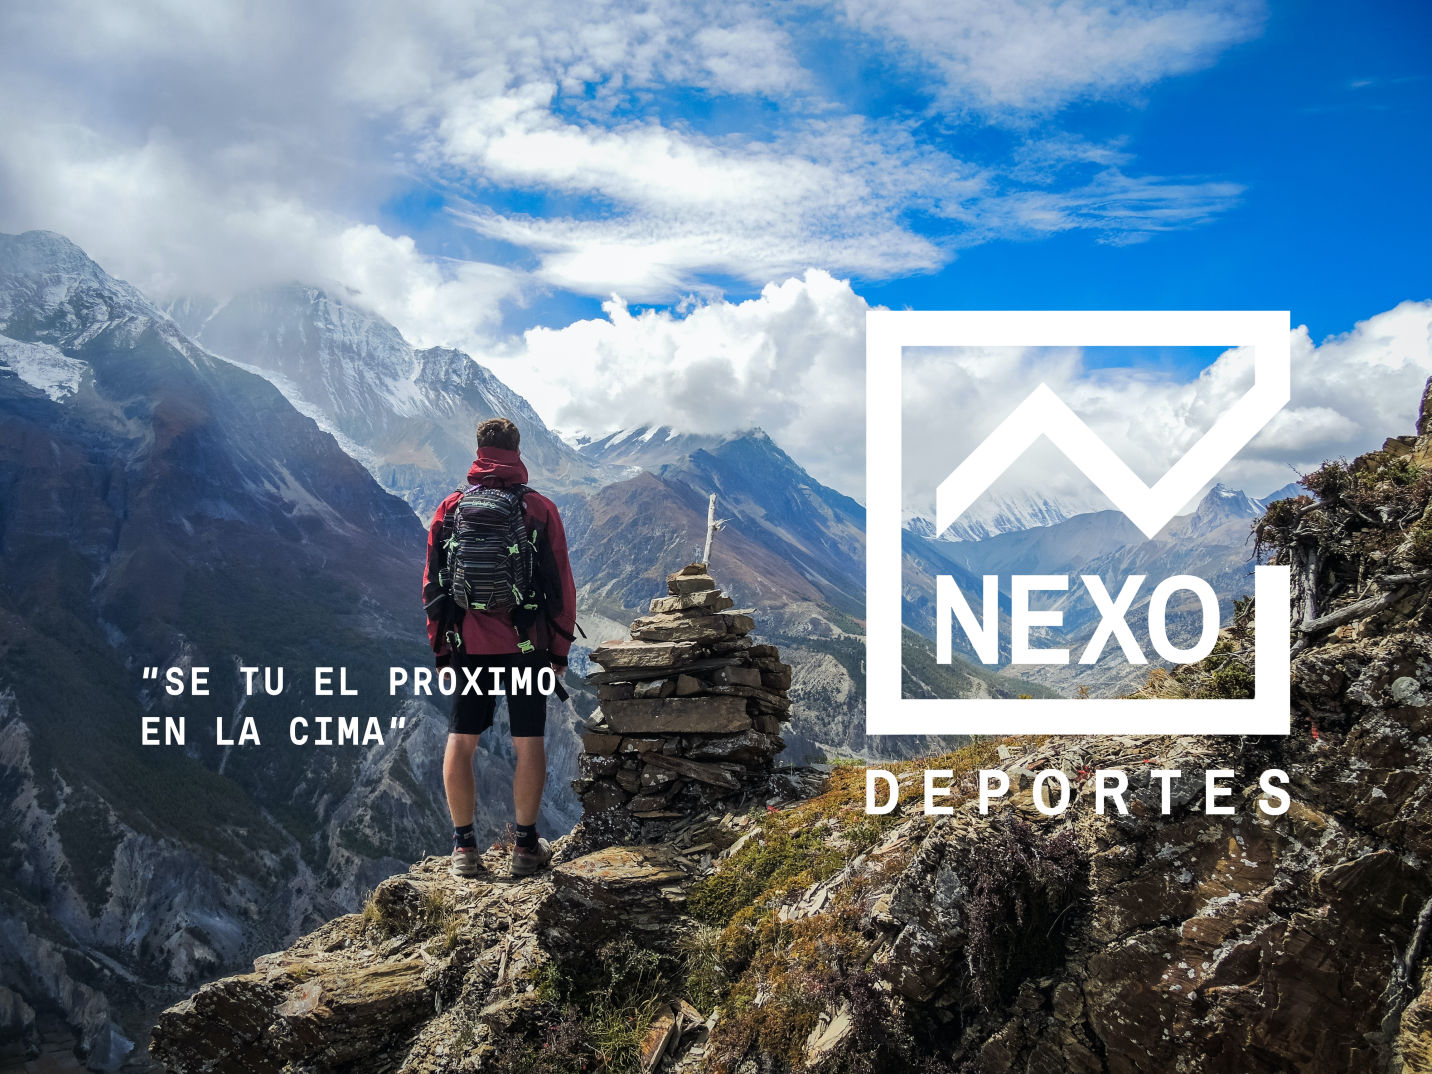 Nexo deportes - Servicios Deportivos - Trekking - Salud - Fitness